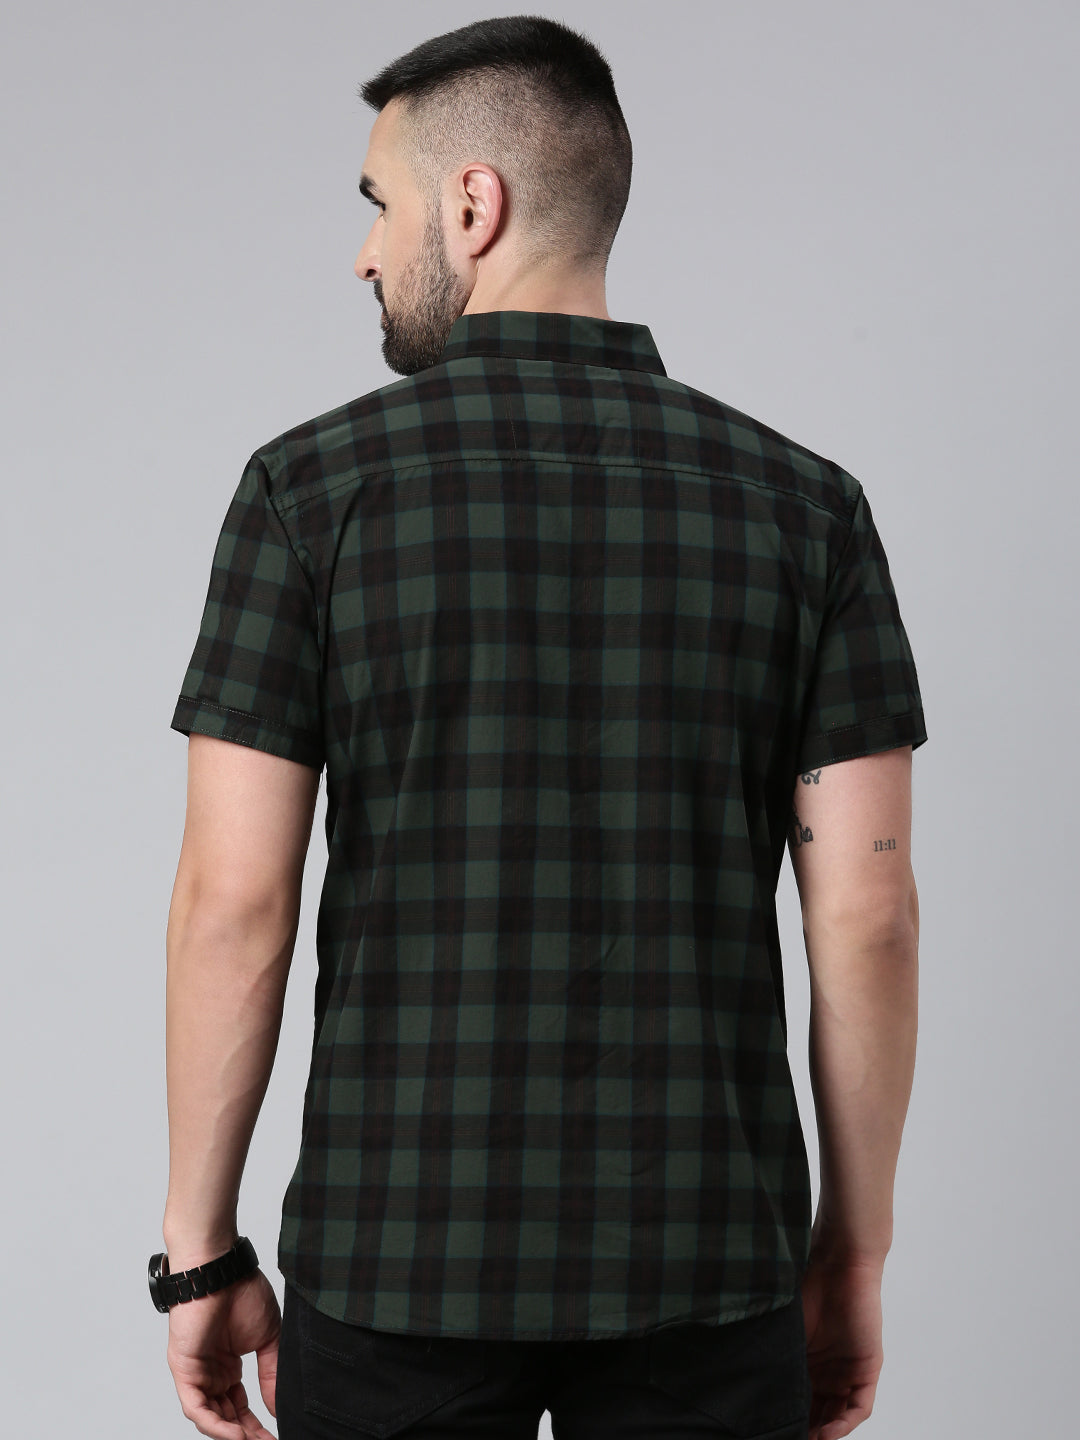 Half Sleeve Men's Casual Checkered Shirt - Bottle Green